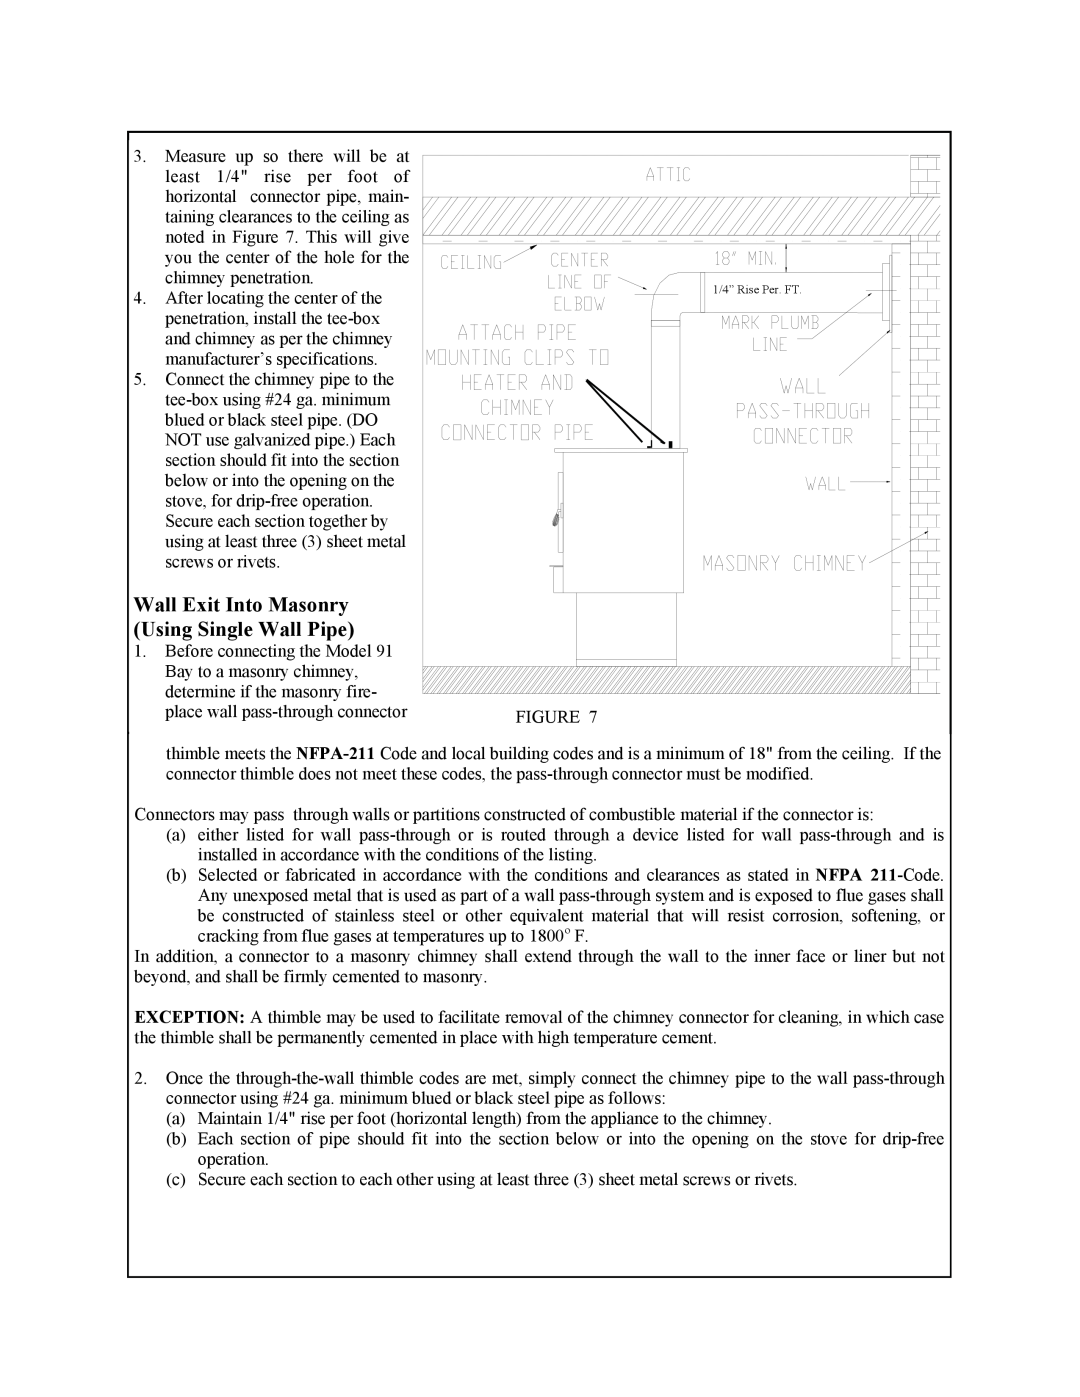 New Buck Corporation 91 manual 1/4” Rise Per. FT 